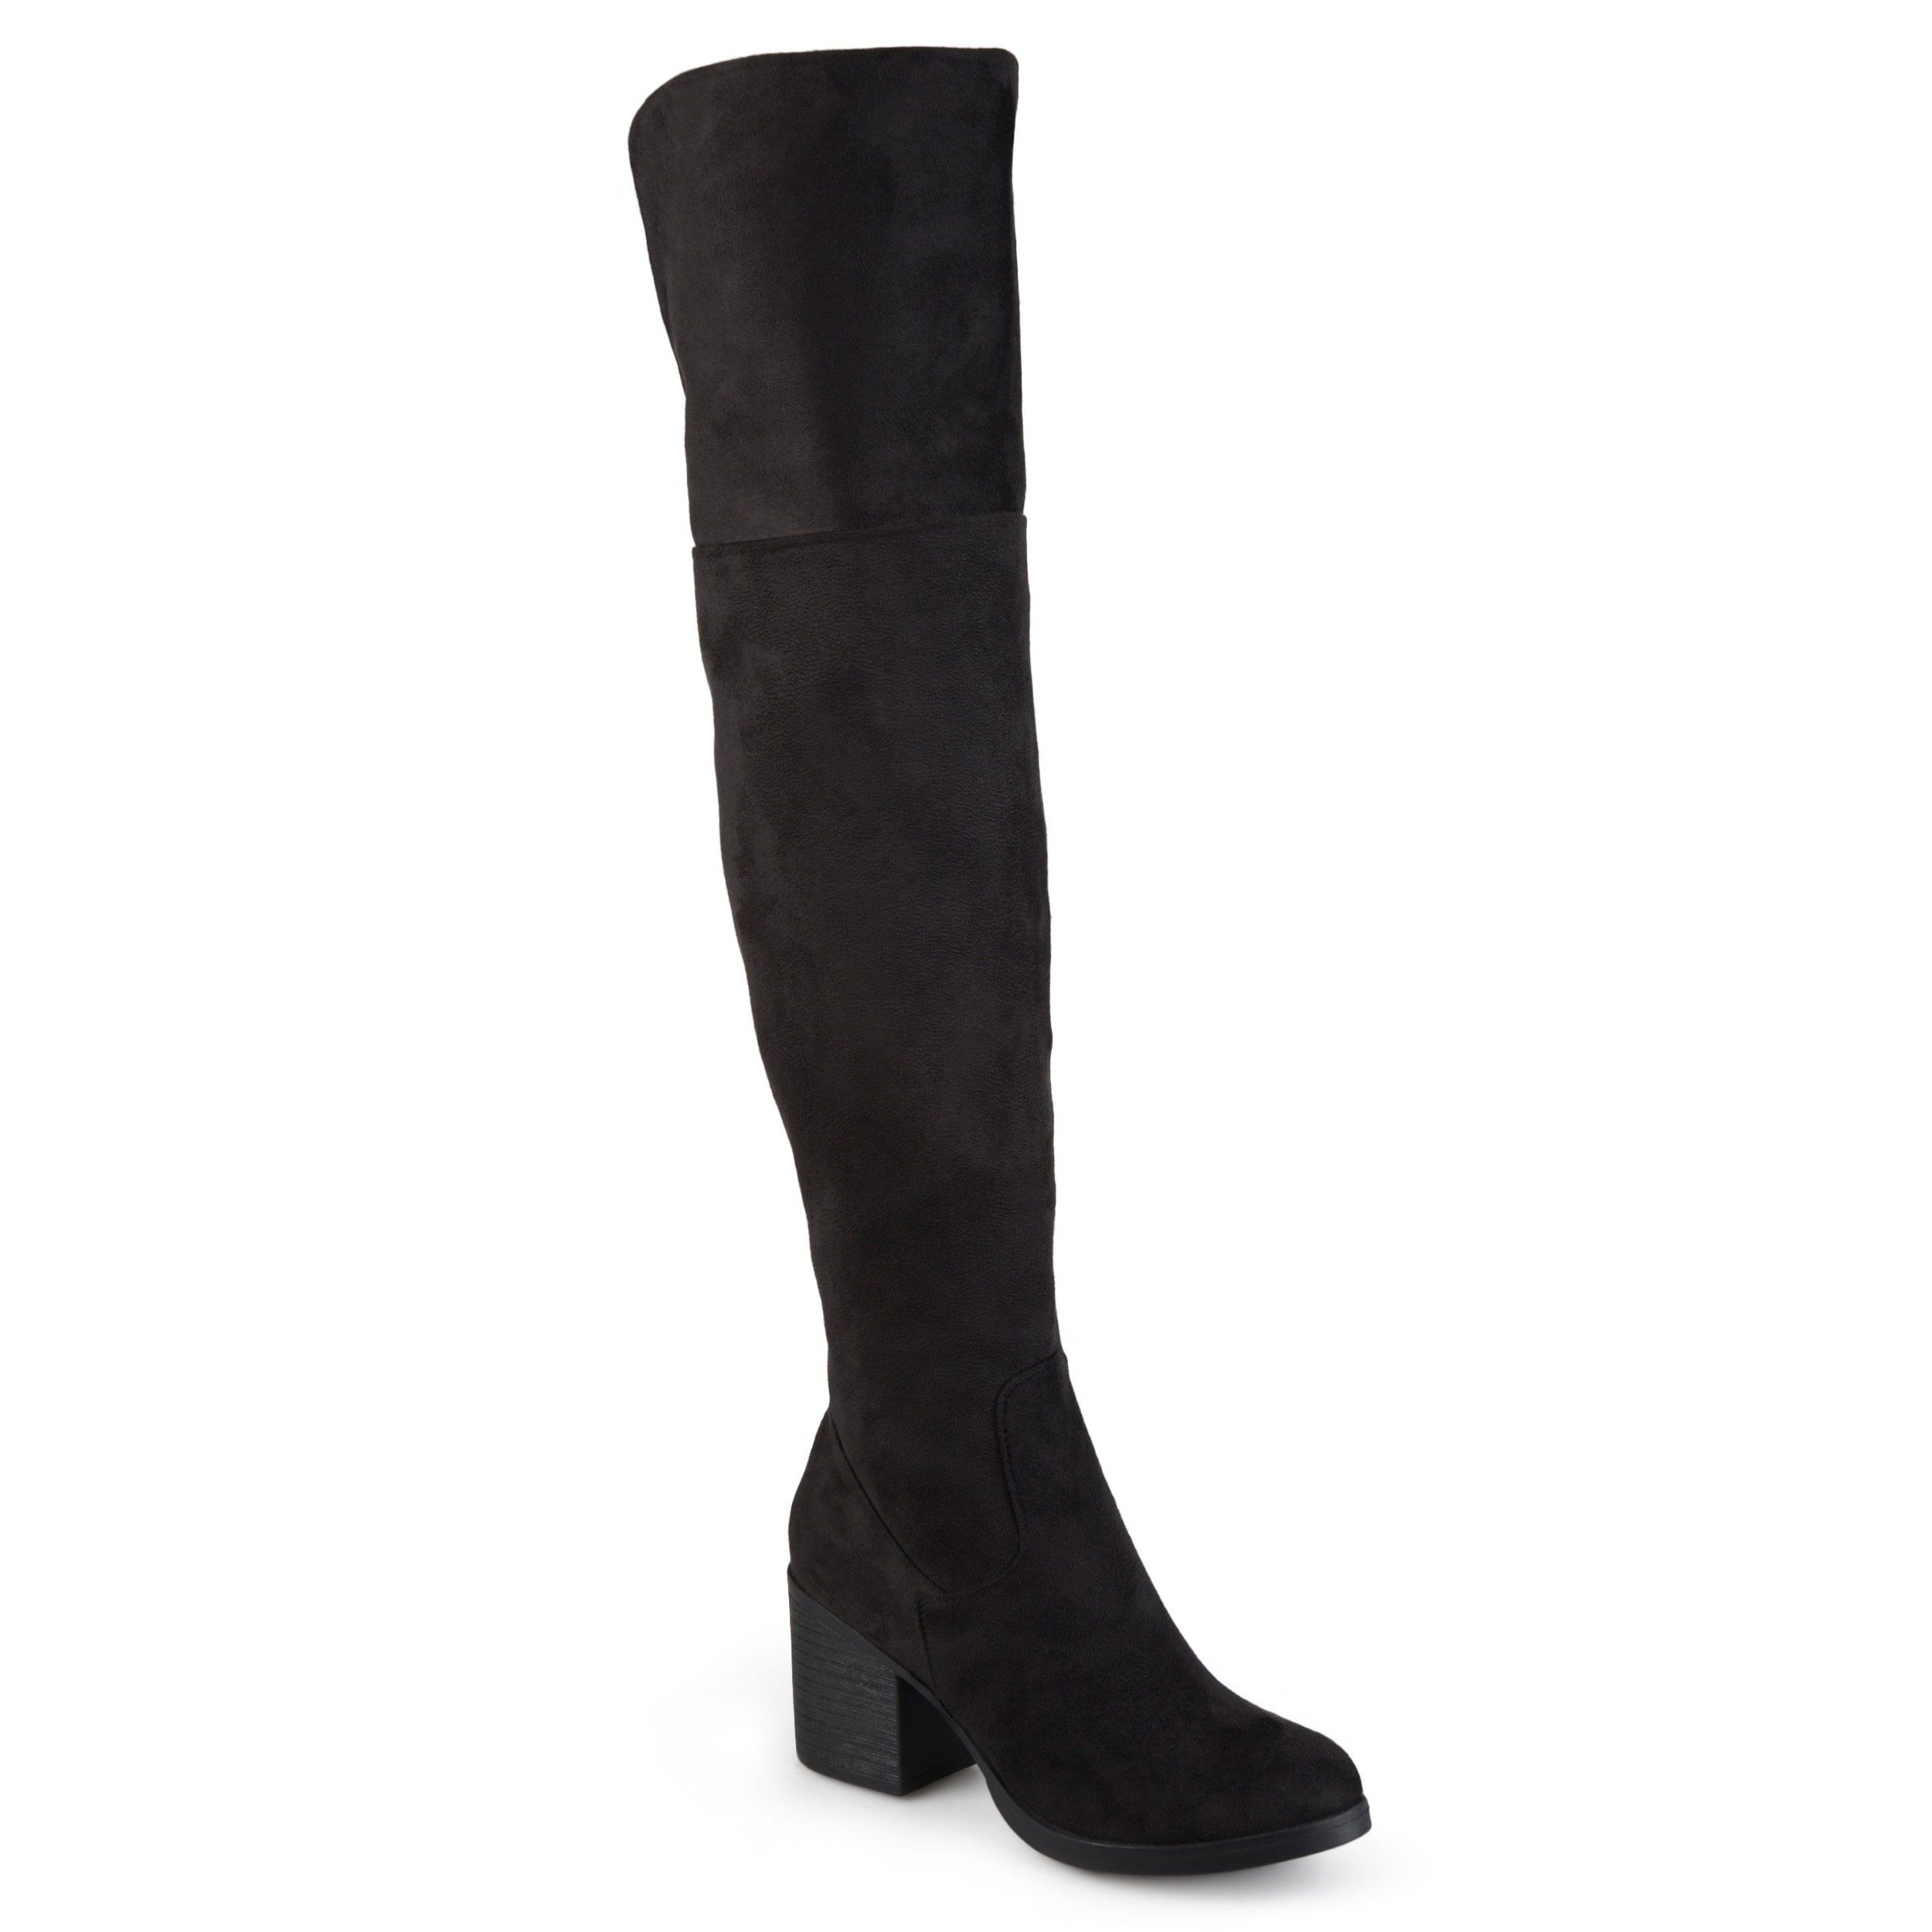 black suede wide calf boots women's